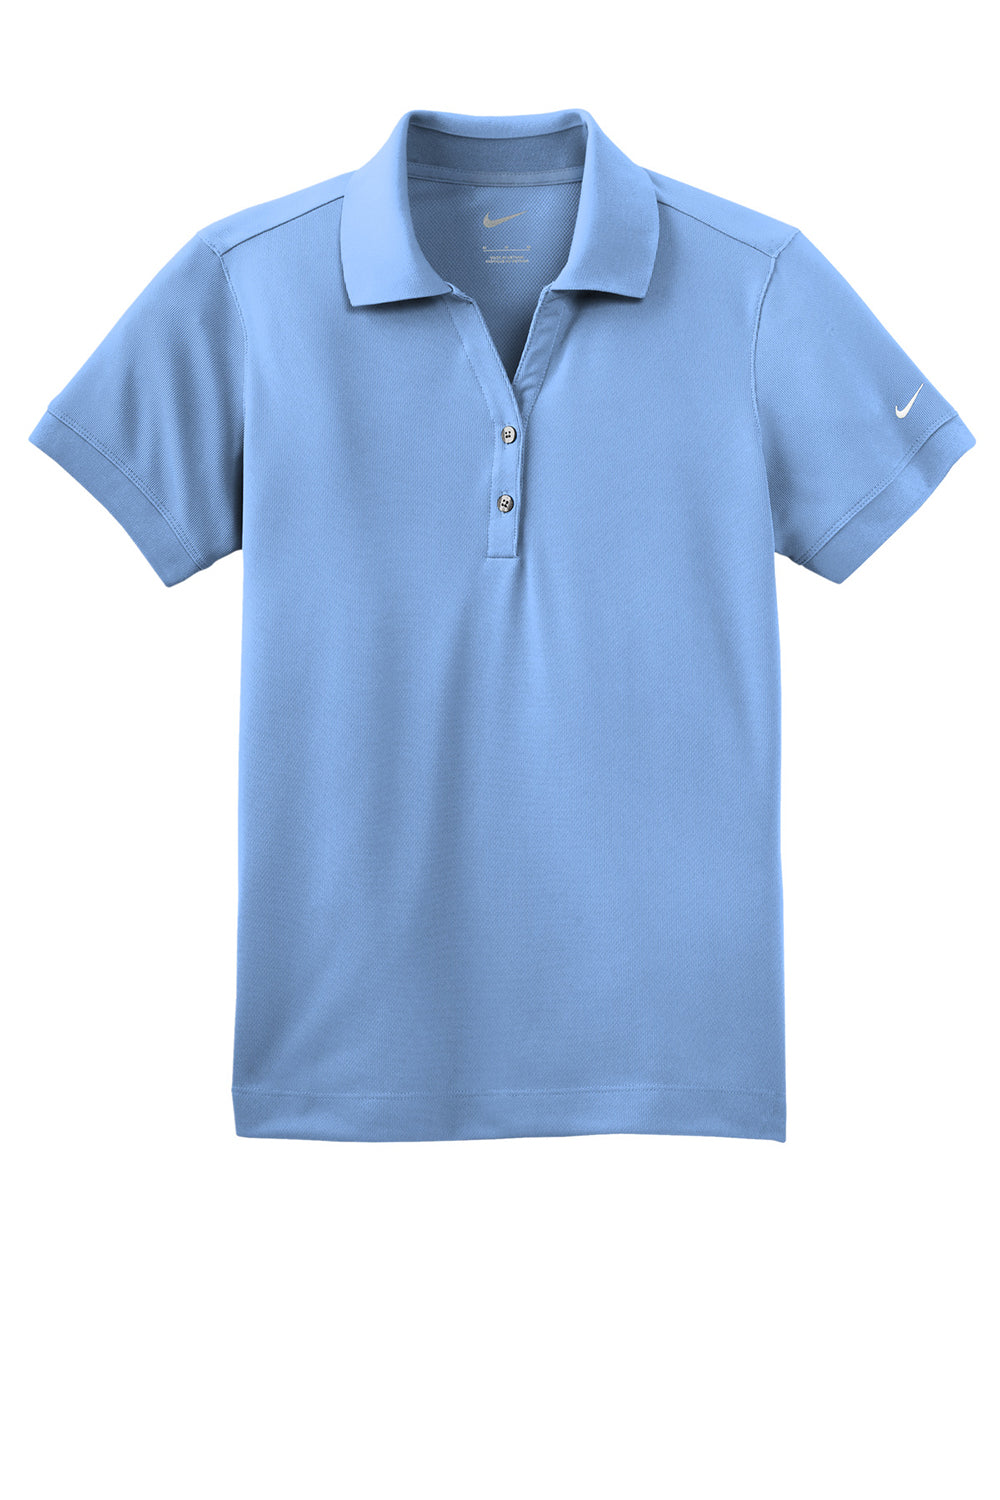 Nike 286772 Womens Classic Dri-Fit Moisture Wicking Short Sleeve Polo Shirt Light Blue Flat Front